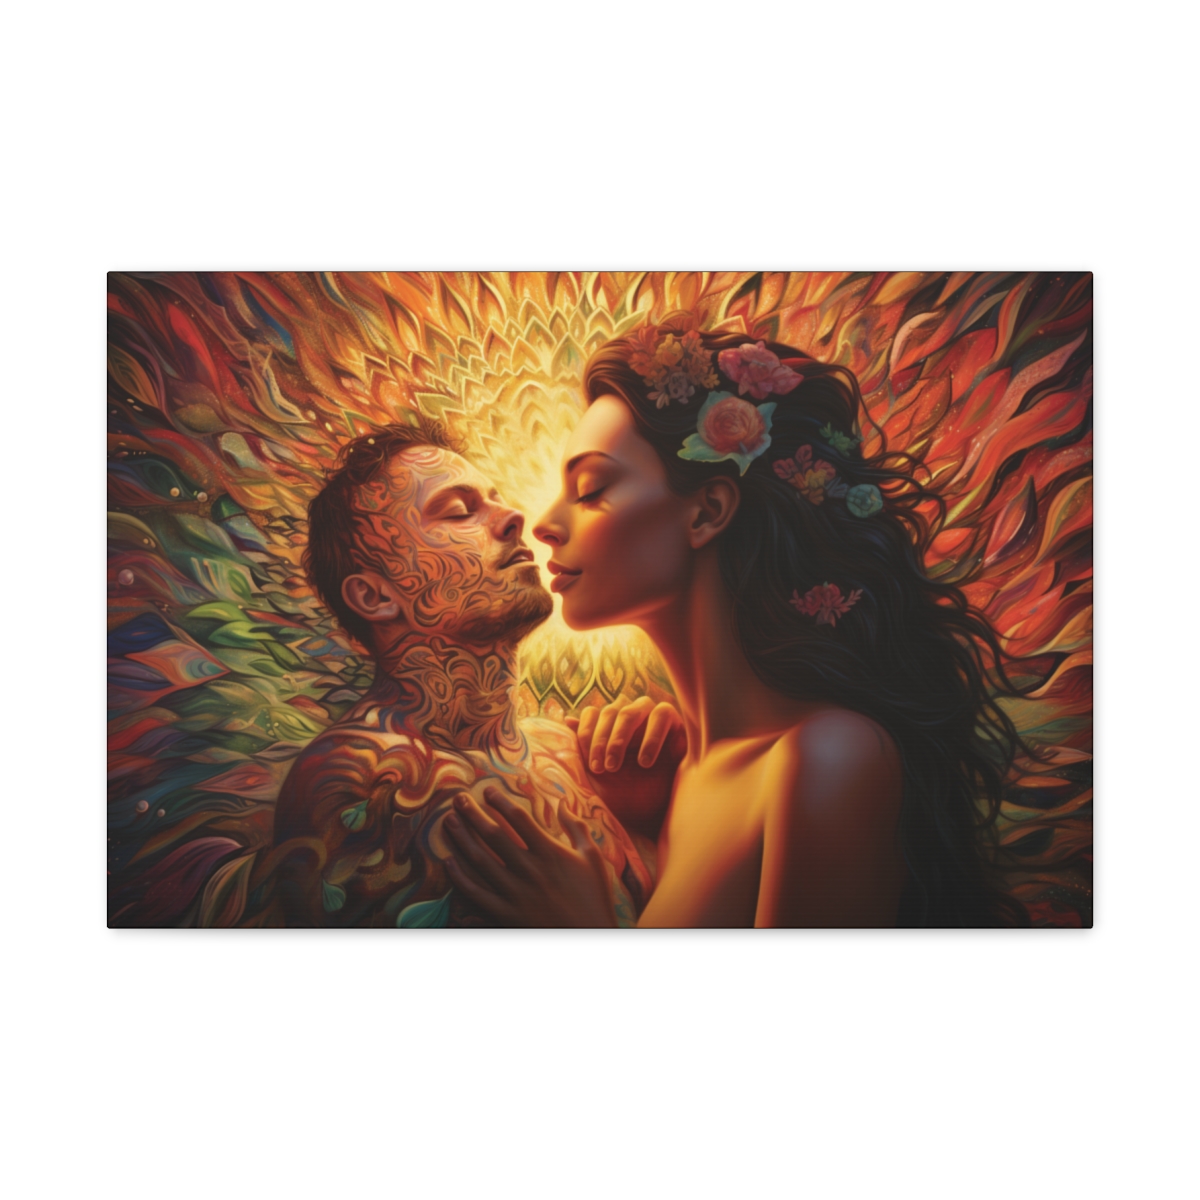 Hippie Love Art: Passion Blooms